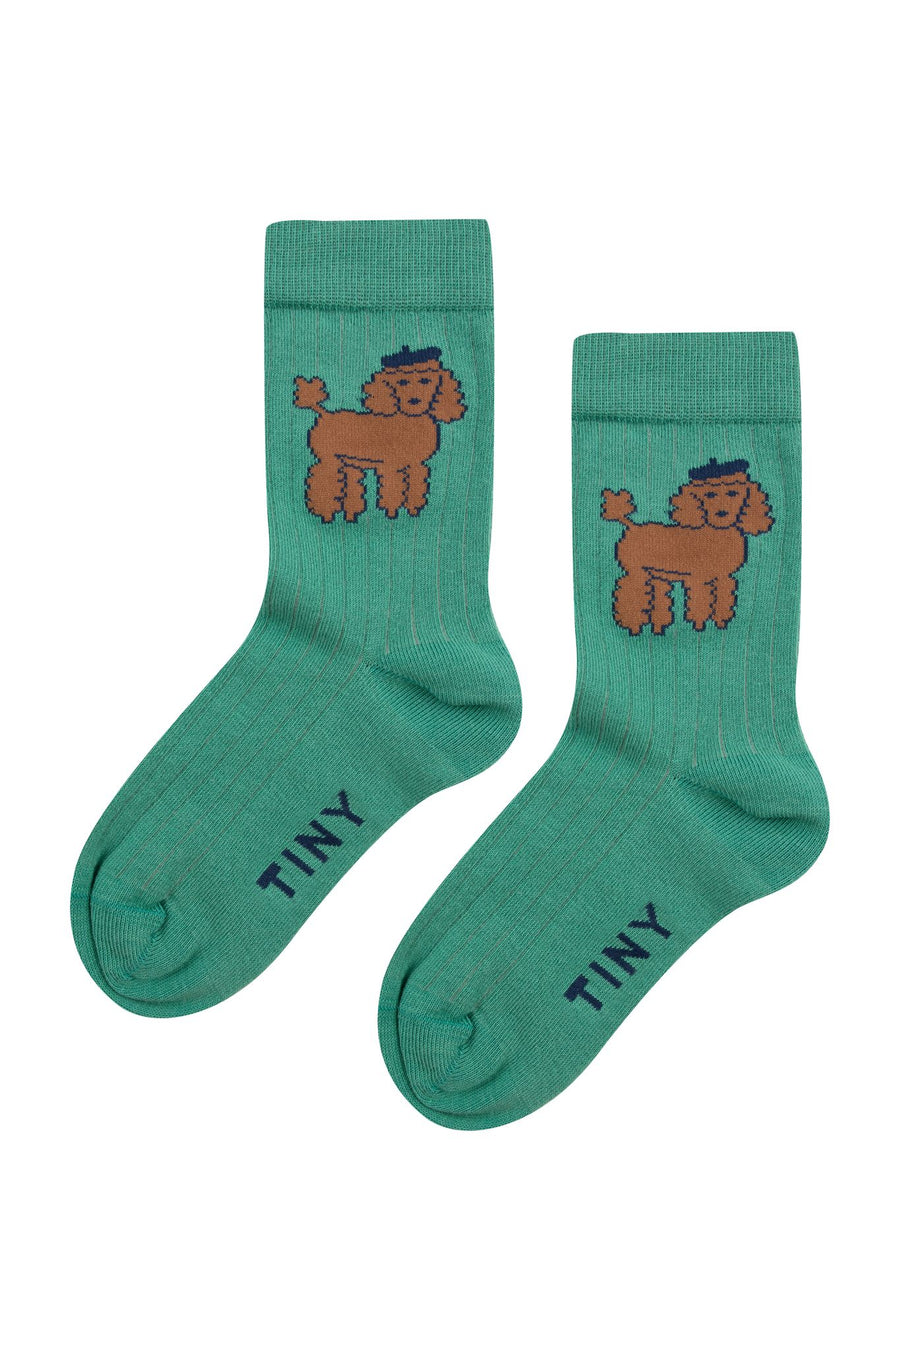 Tiny Cottons - poodle socks - emerald